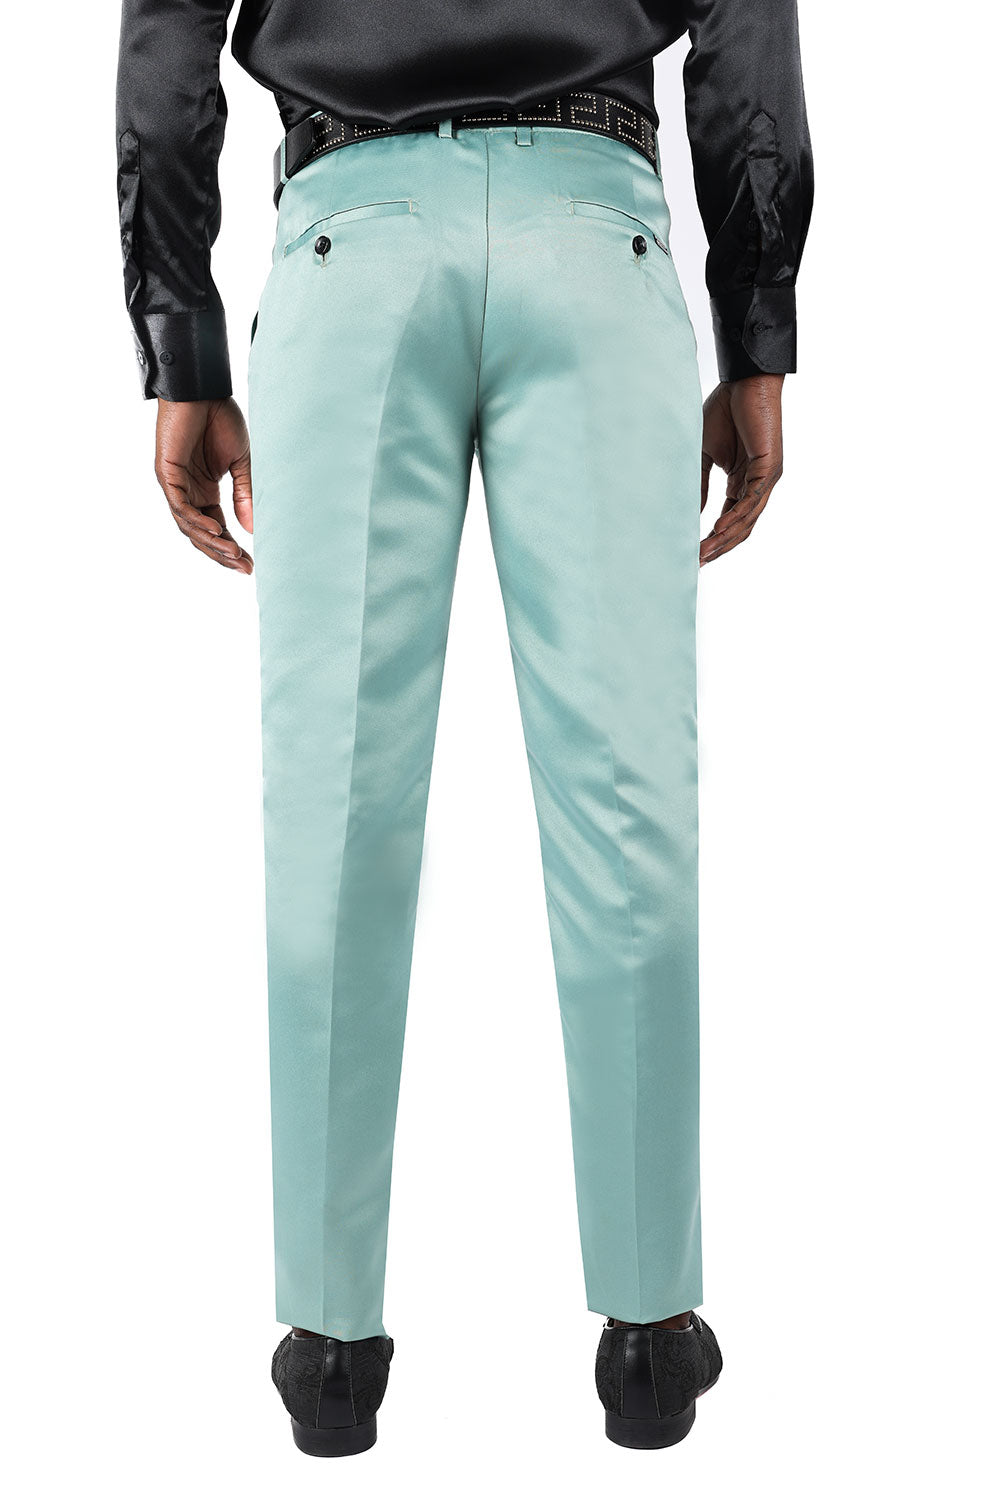 BARABAS Men's Solid Color Plain Shiny Chino Dress Pants 3CP02  teal